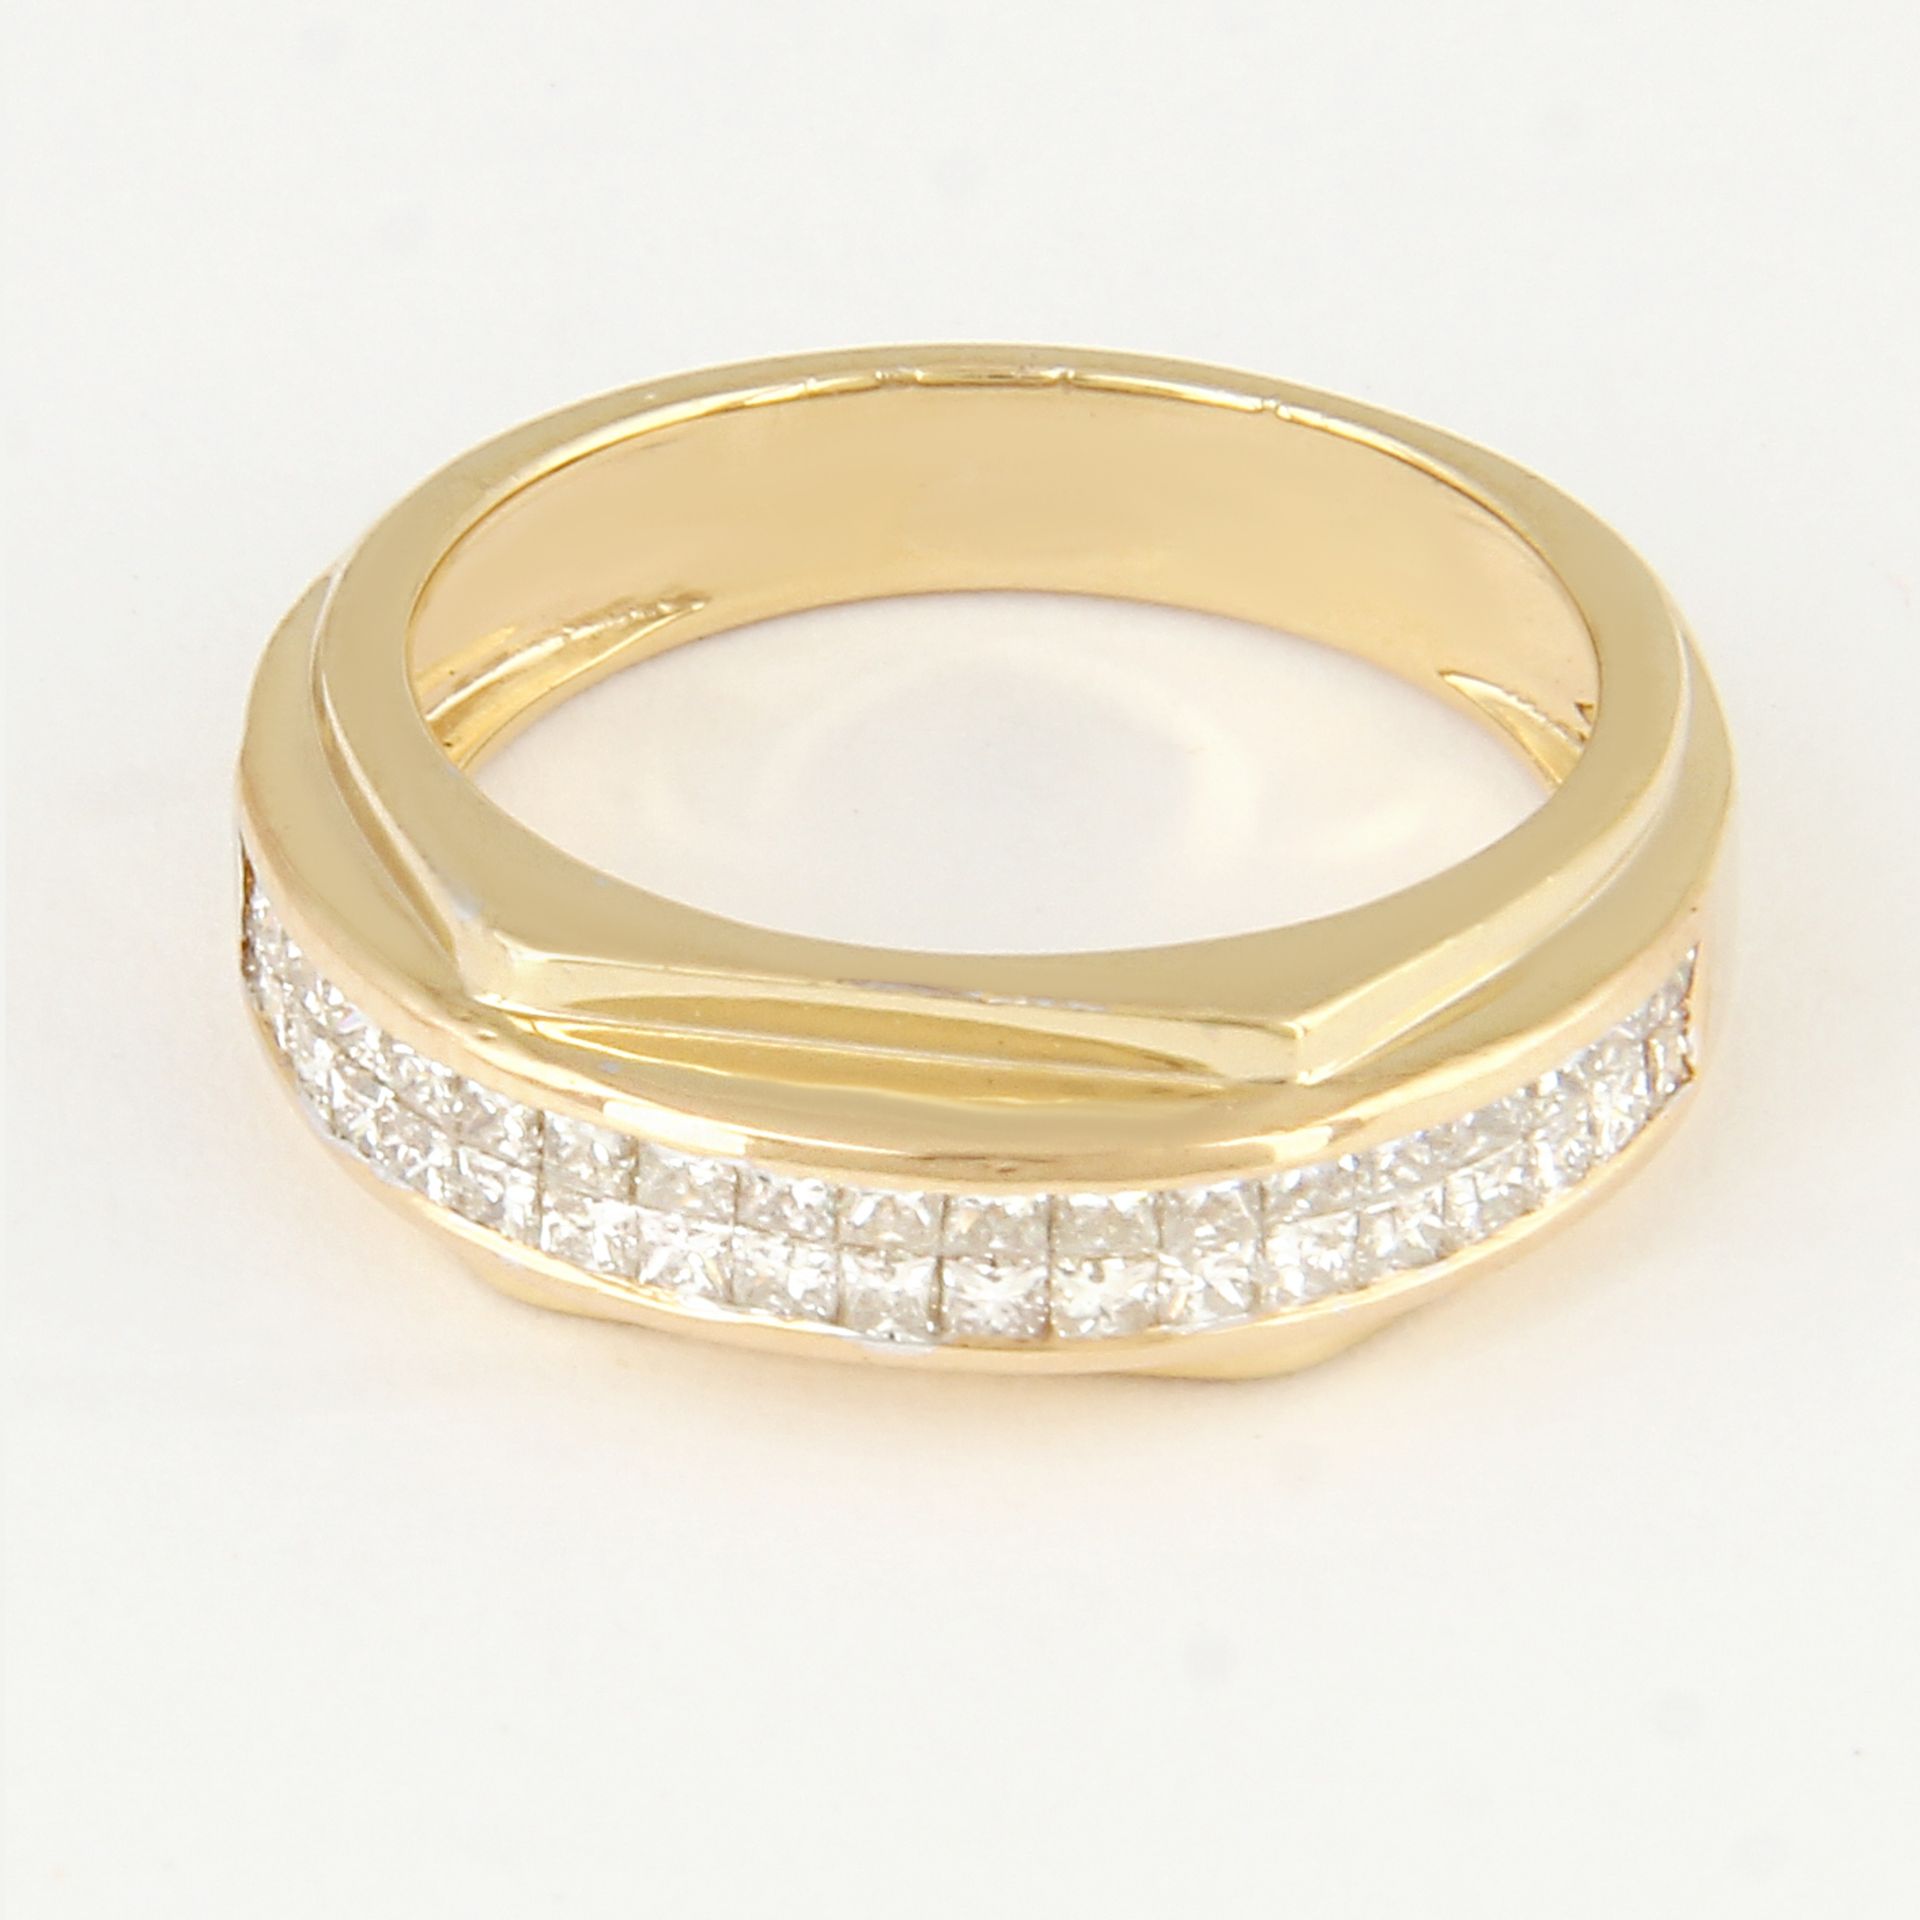 14 K / 585 Yellow Gold Diamond Ring - Image 2 of 4